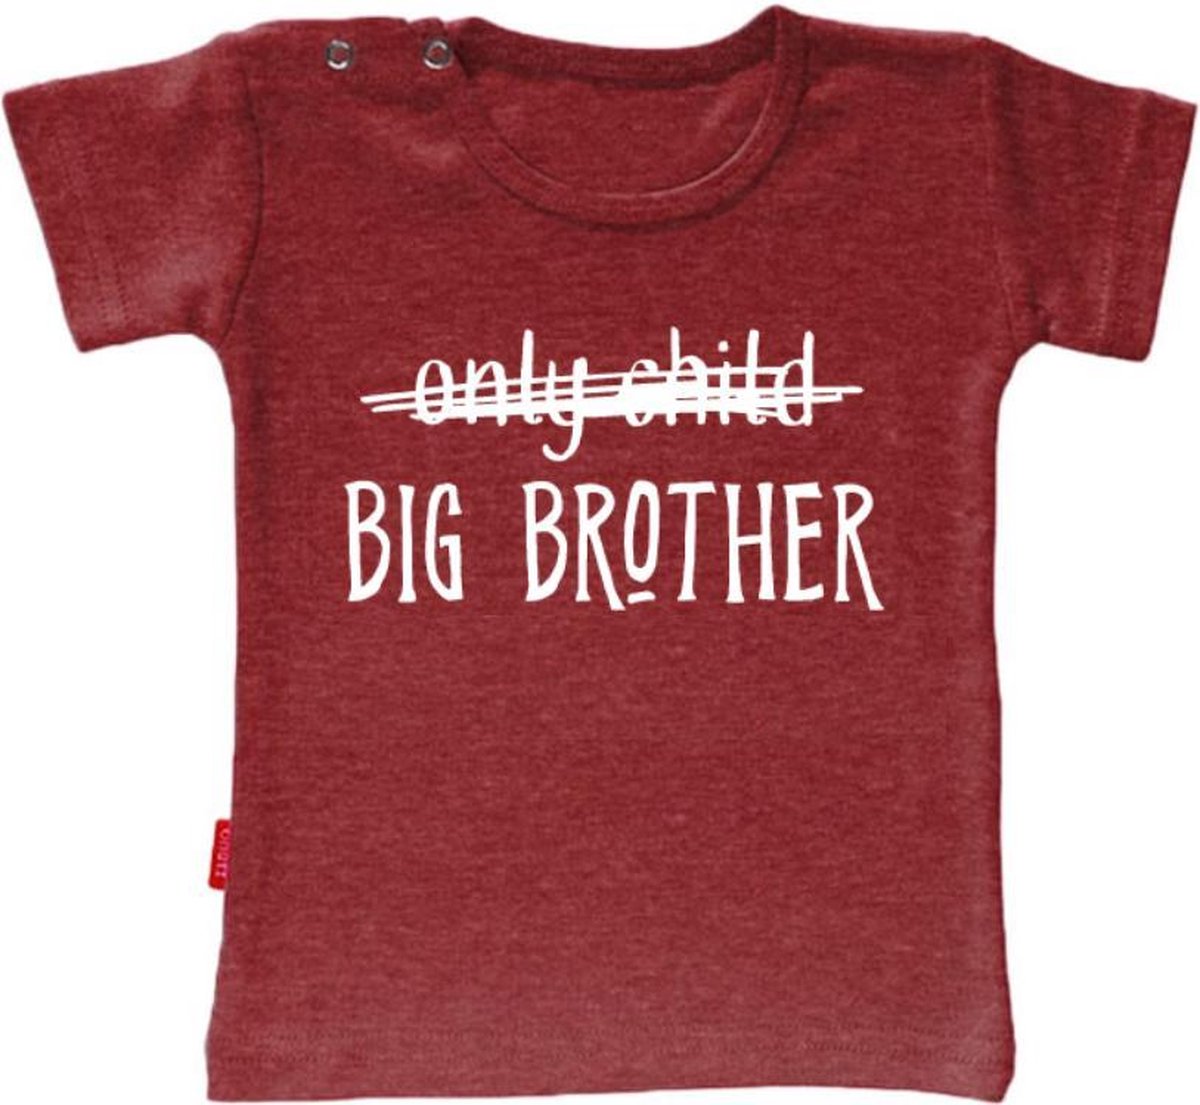 T-shirt Zwangerschapsaankondiging Grote Broer - Only Child Big Brother - Bordeaux - 3-4j